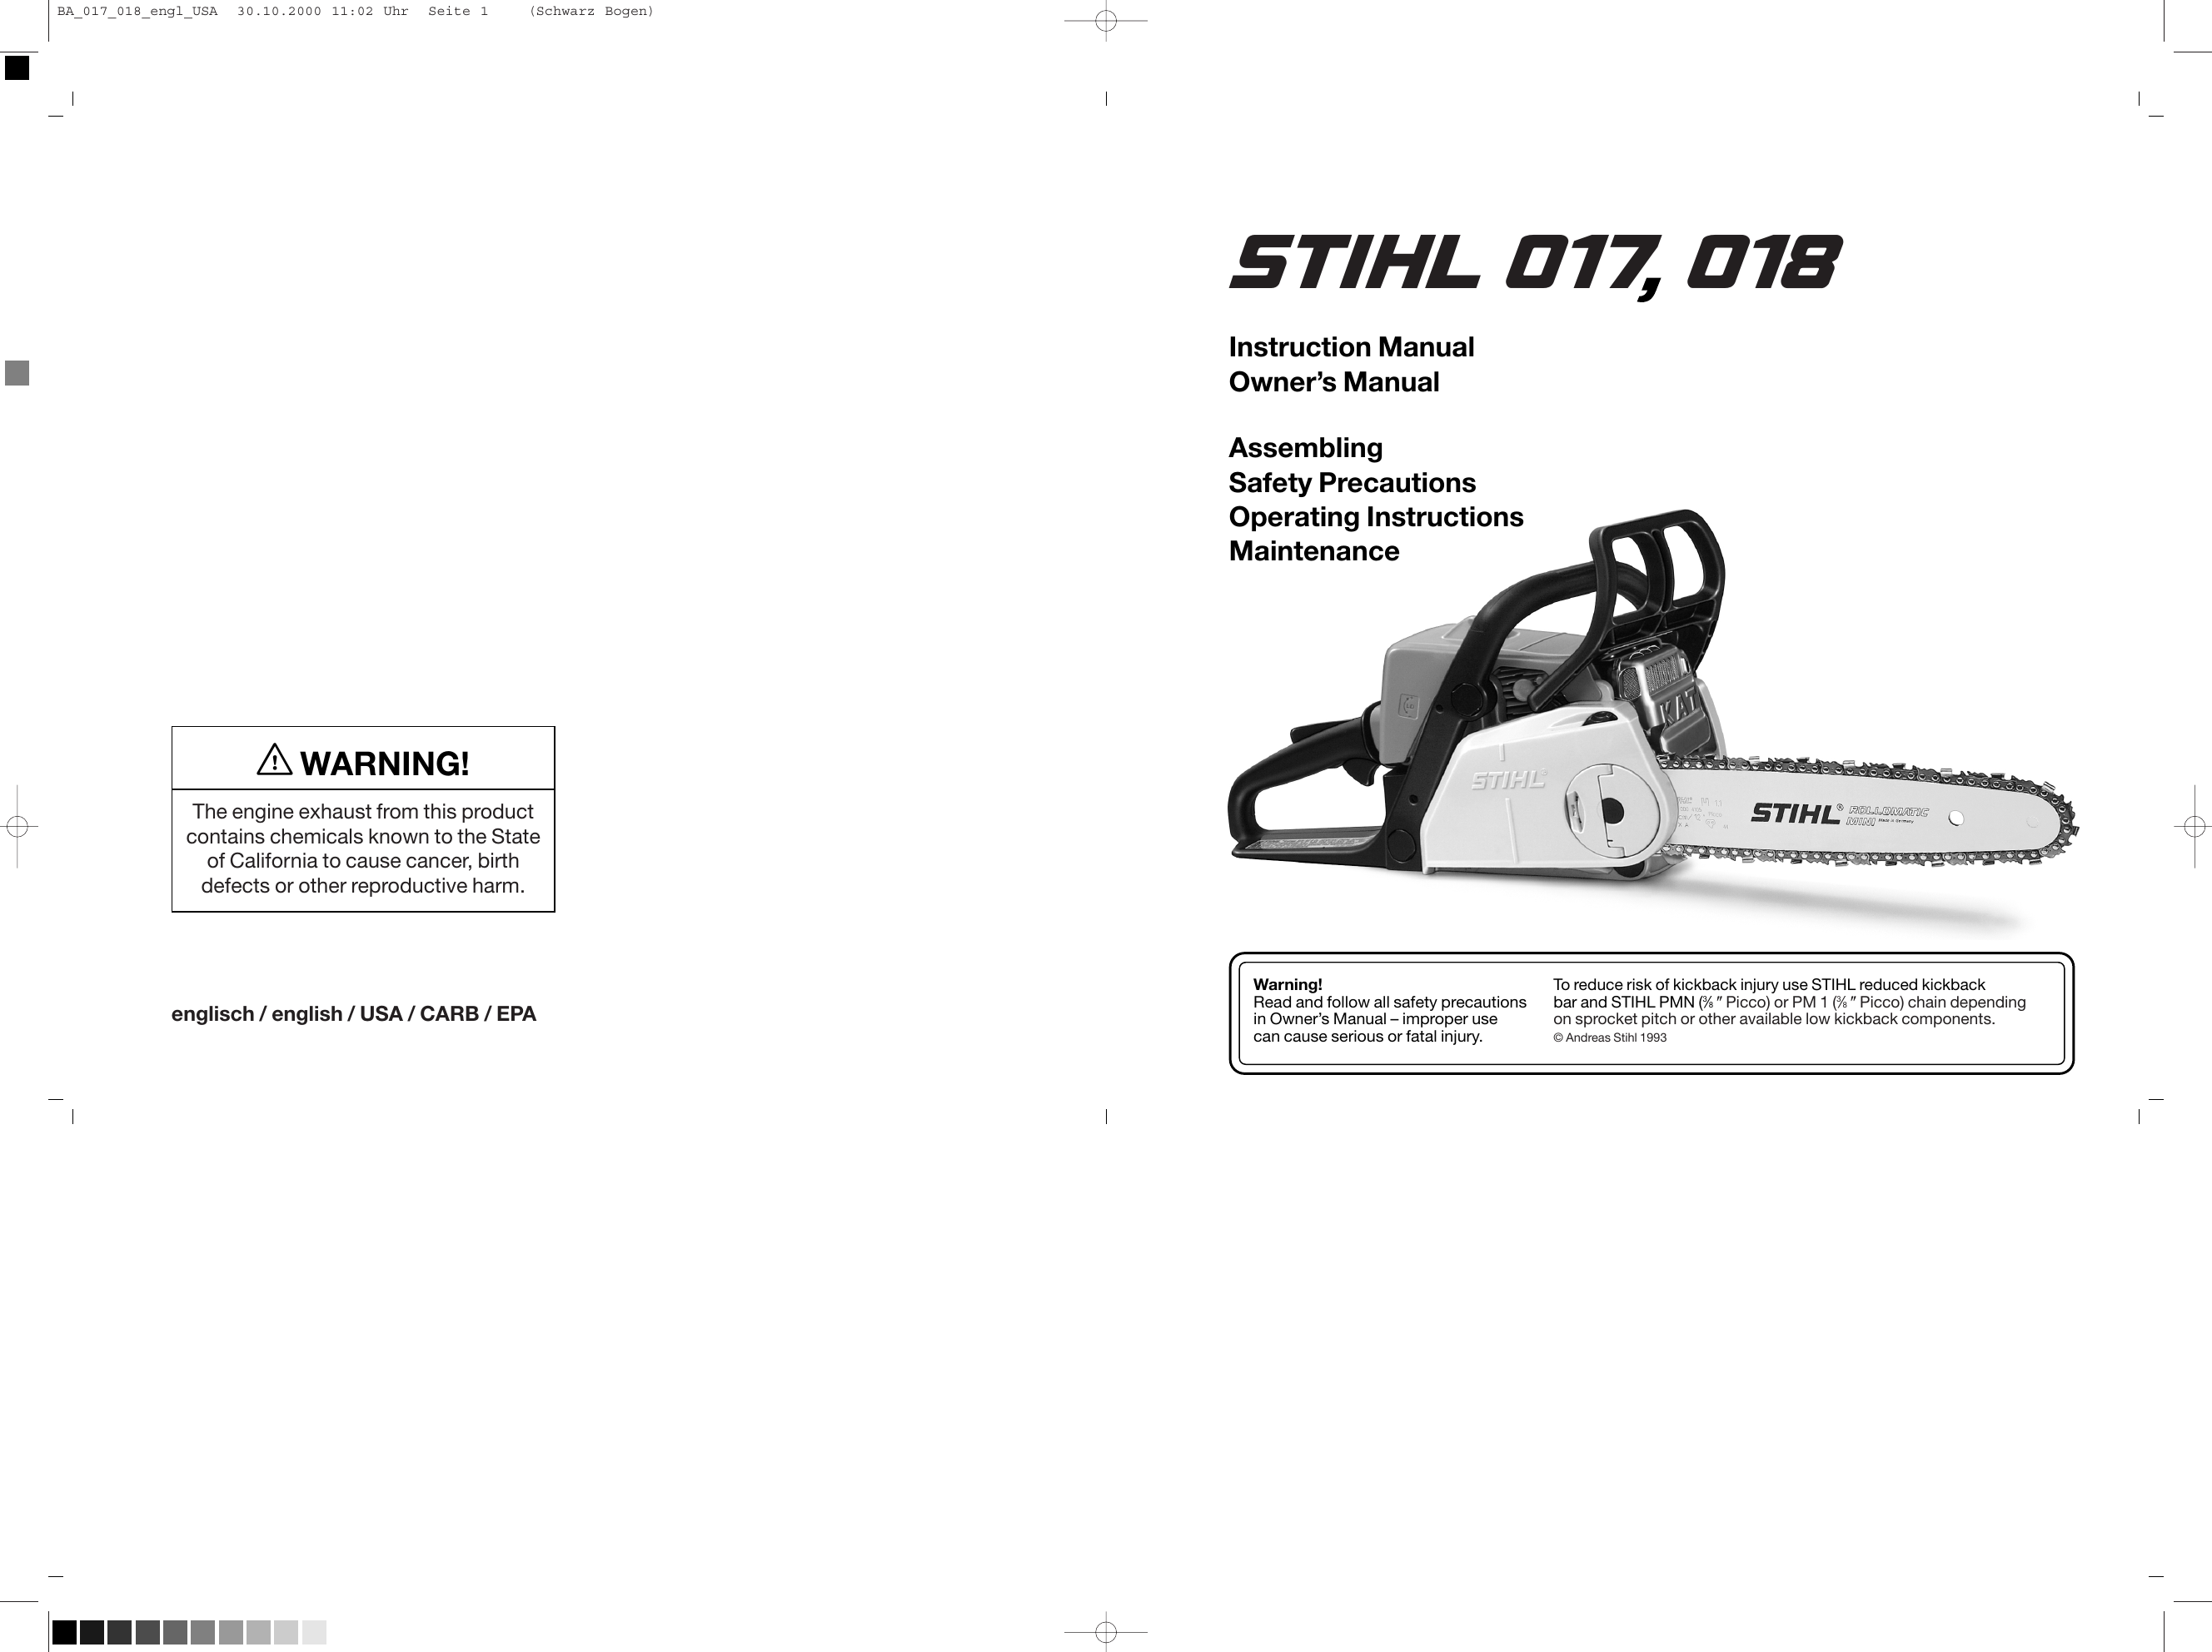 Штиль бензопила расход. Stihl 041 av manuals характеристики. Расход пилы штиль 180. Штиль 180 pdf.